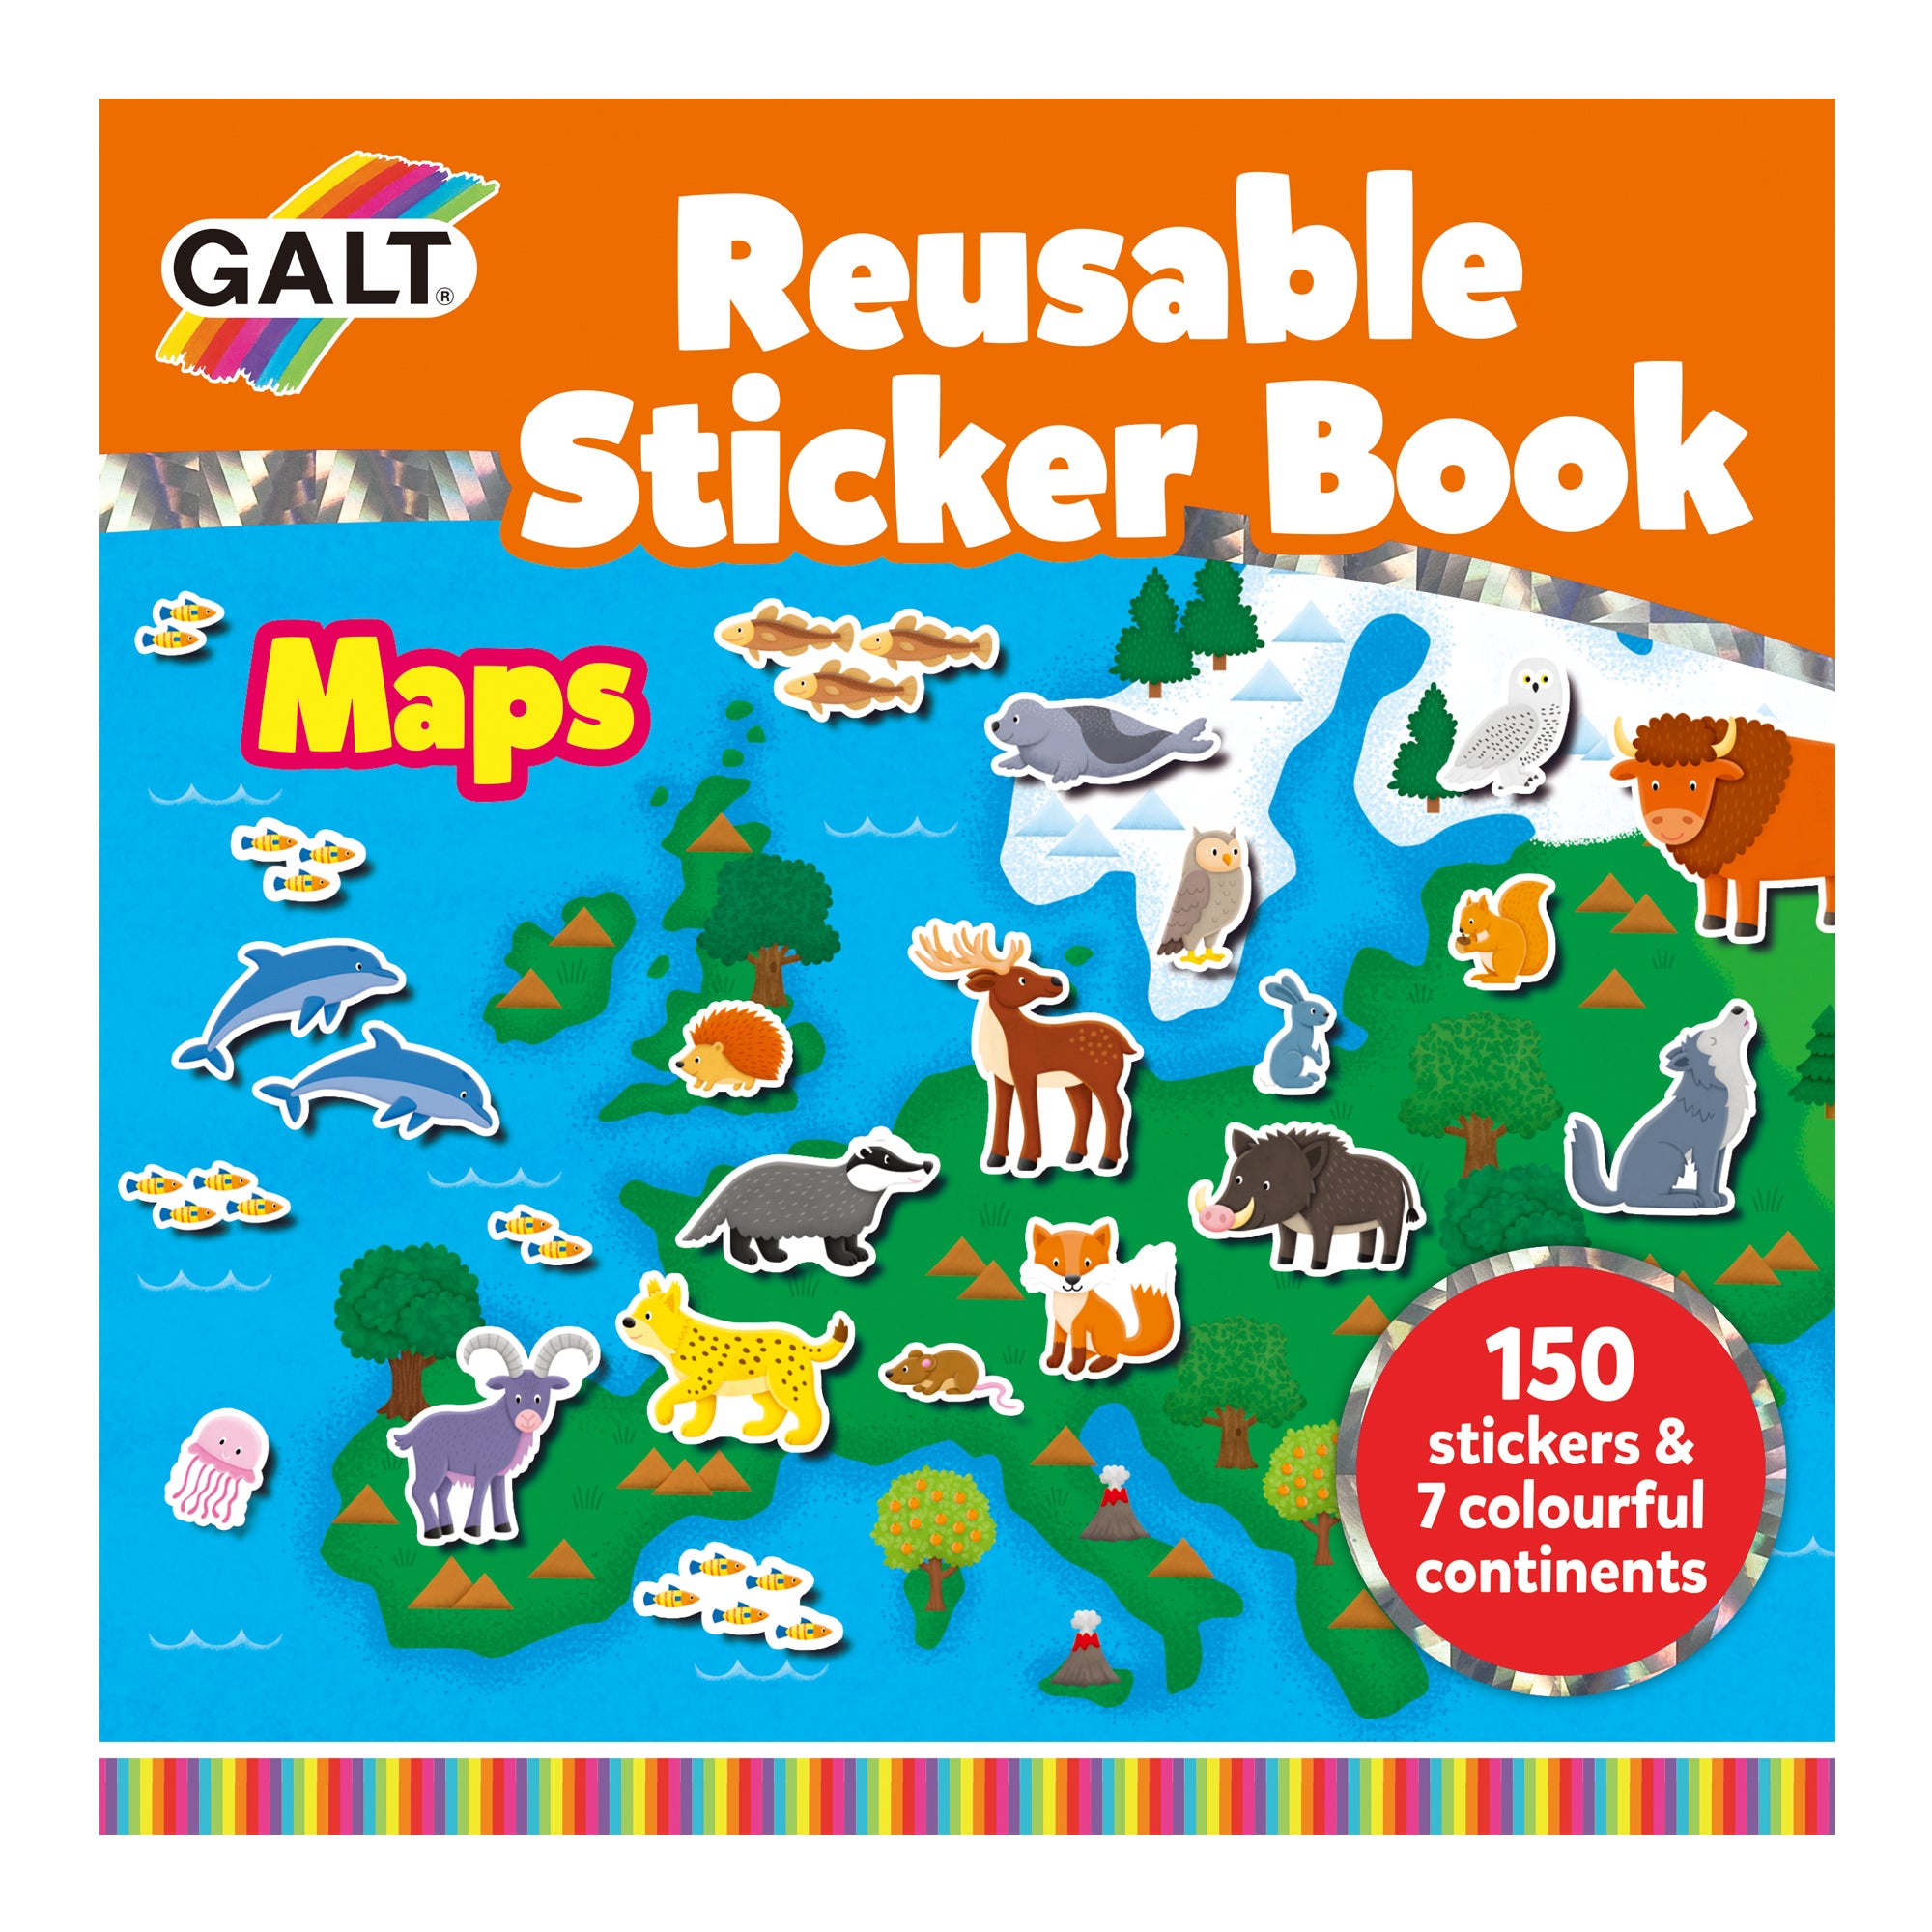 Maps - Reusable Sticker Book - Galt Toys Ireland